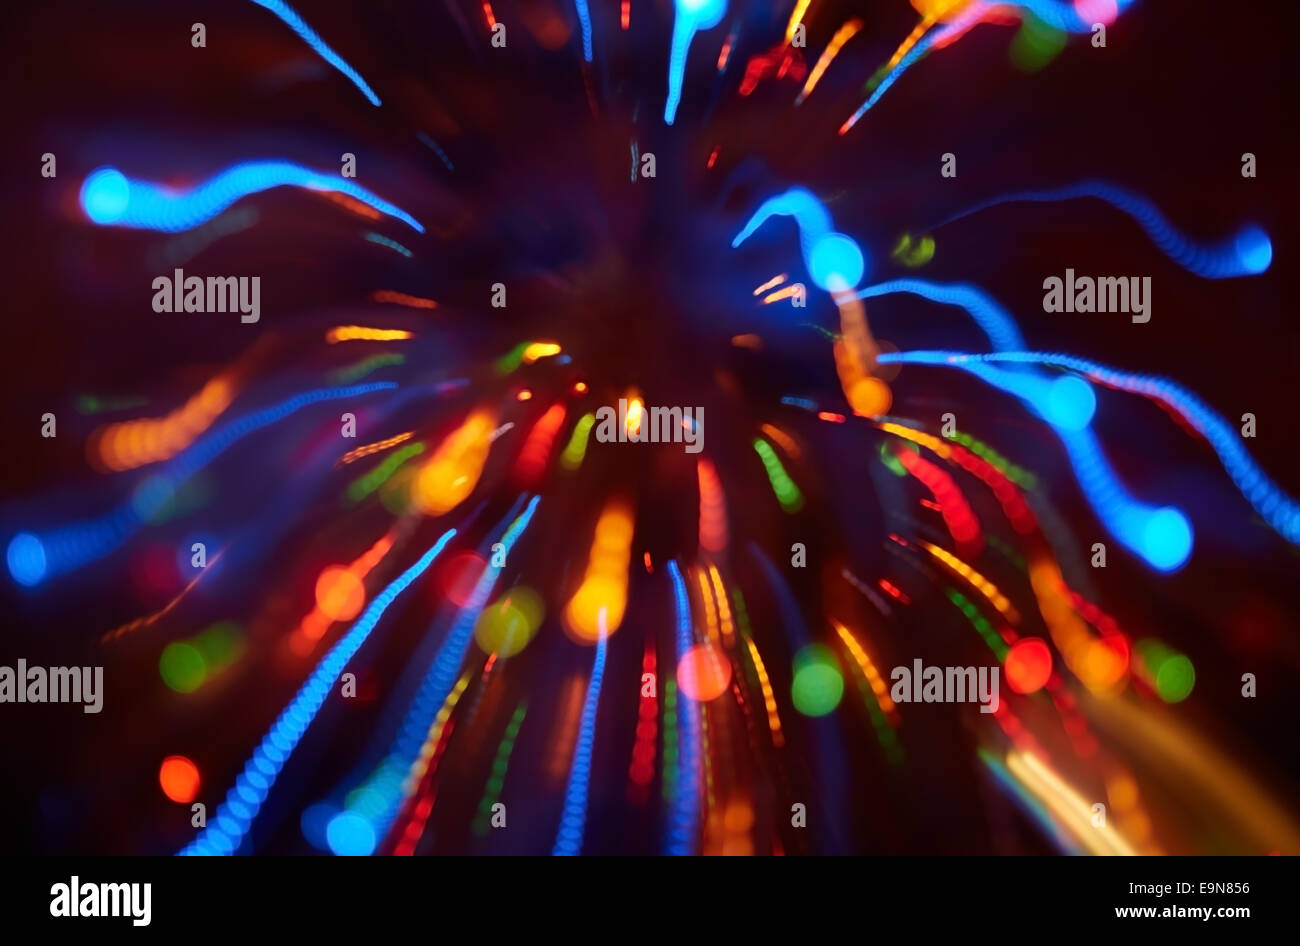 Celebration blurred background Stock Photo - Alamy